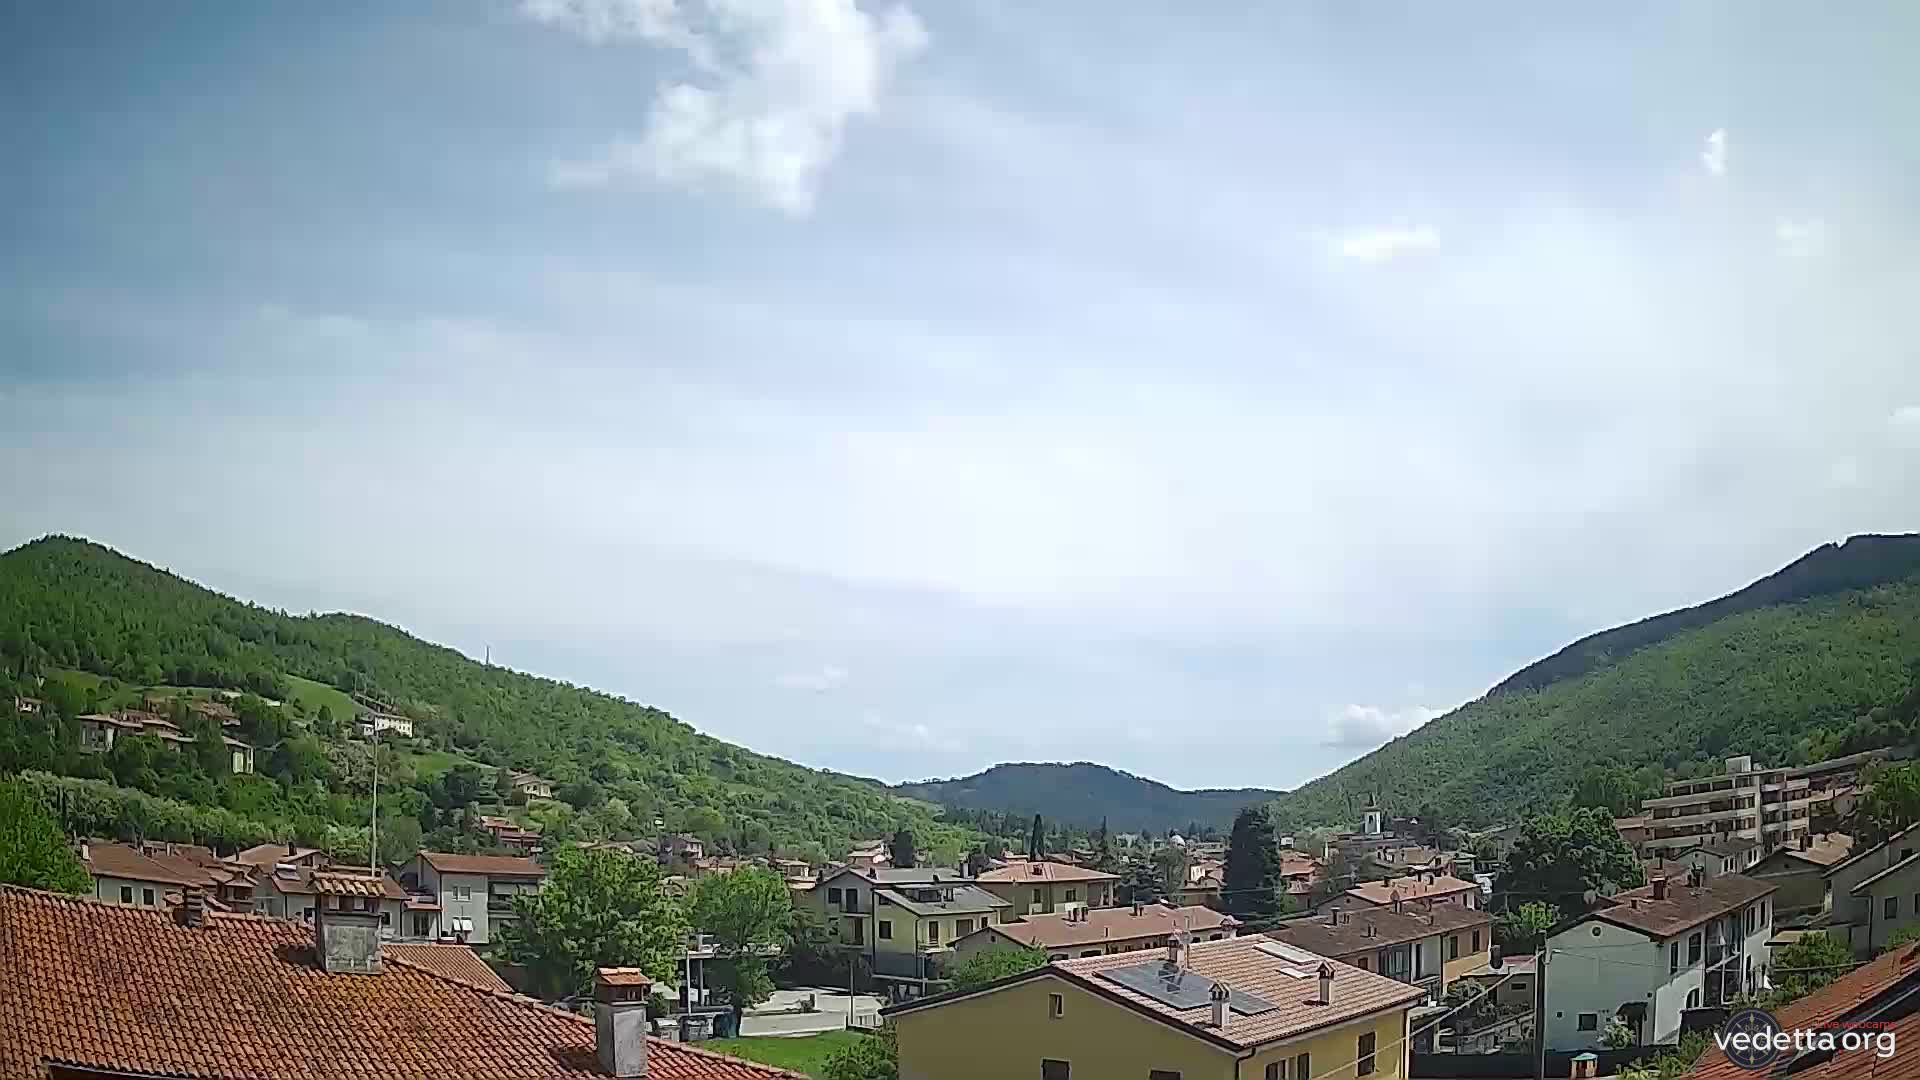 Webkamera - Pieve Santo Stefano